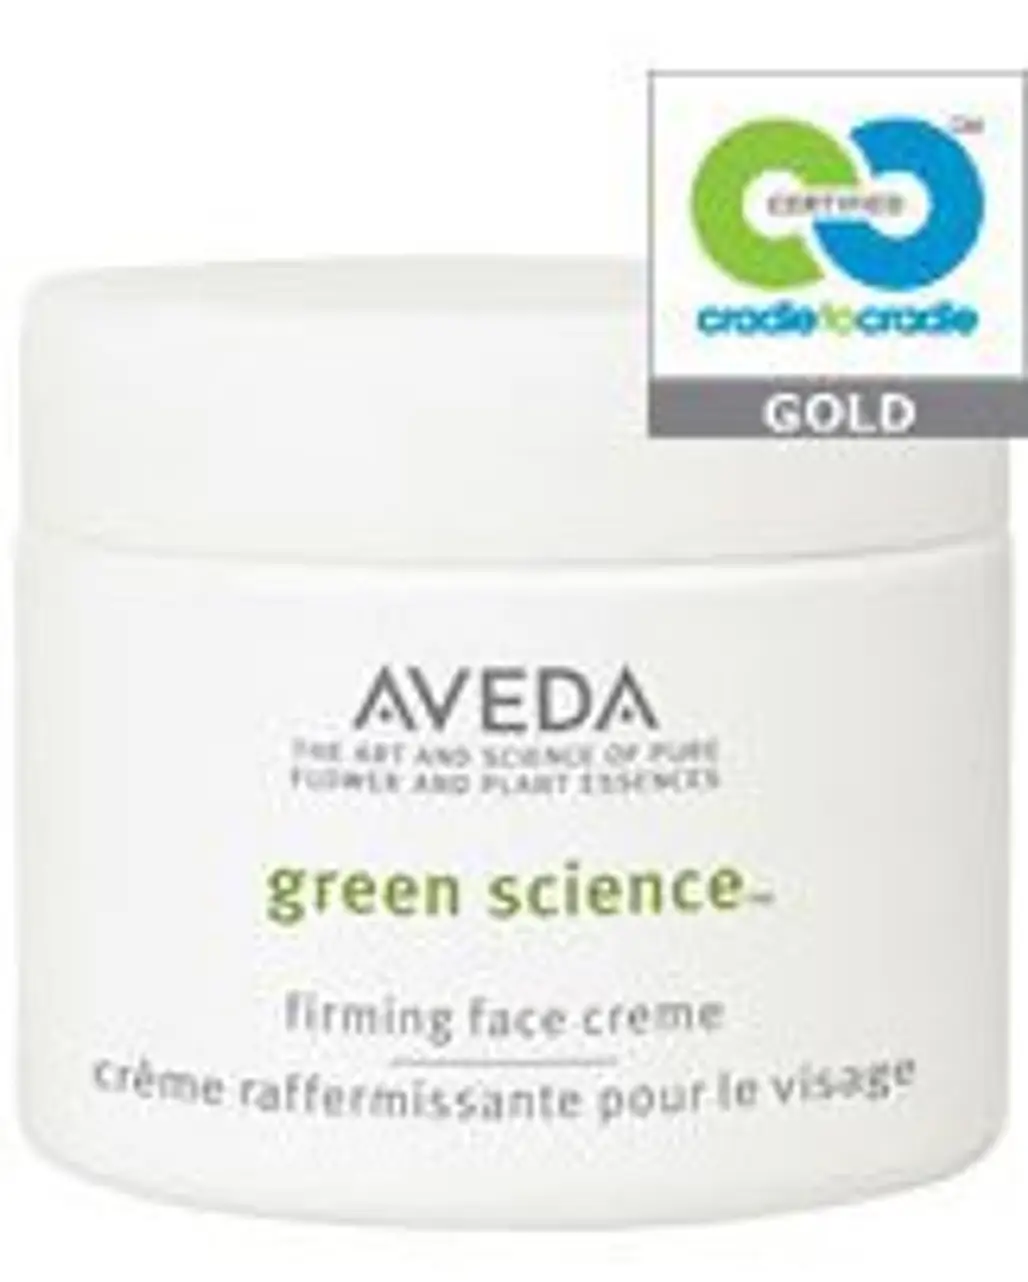 Aveda Green ScienceTM Firming Face Creme